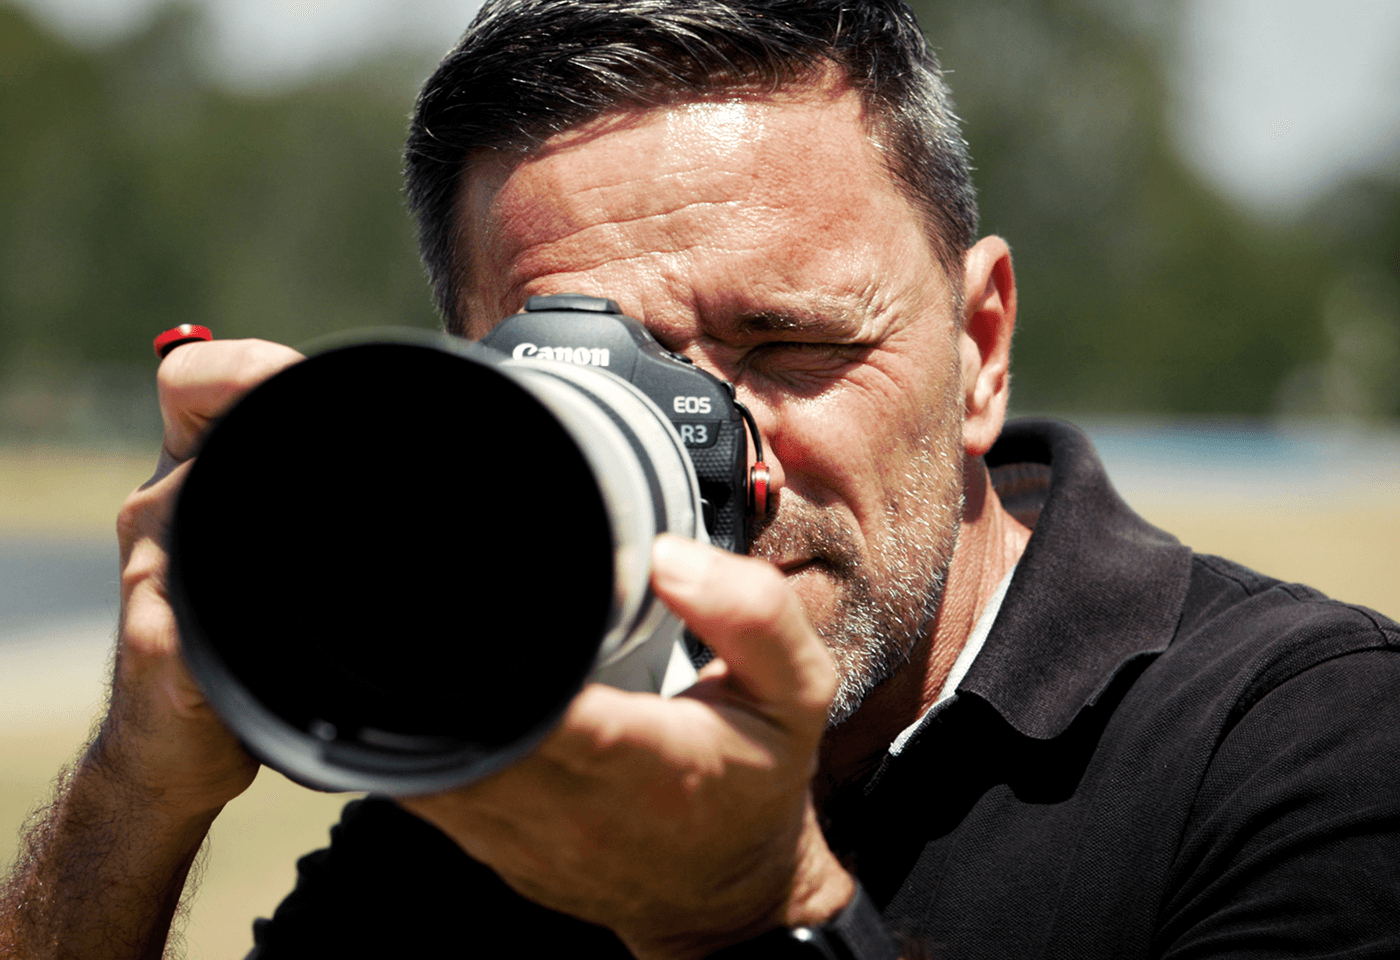 Canon Master Mark Horsburgh using a Canon EOS camera with telephoto lens